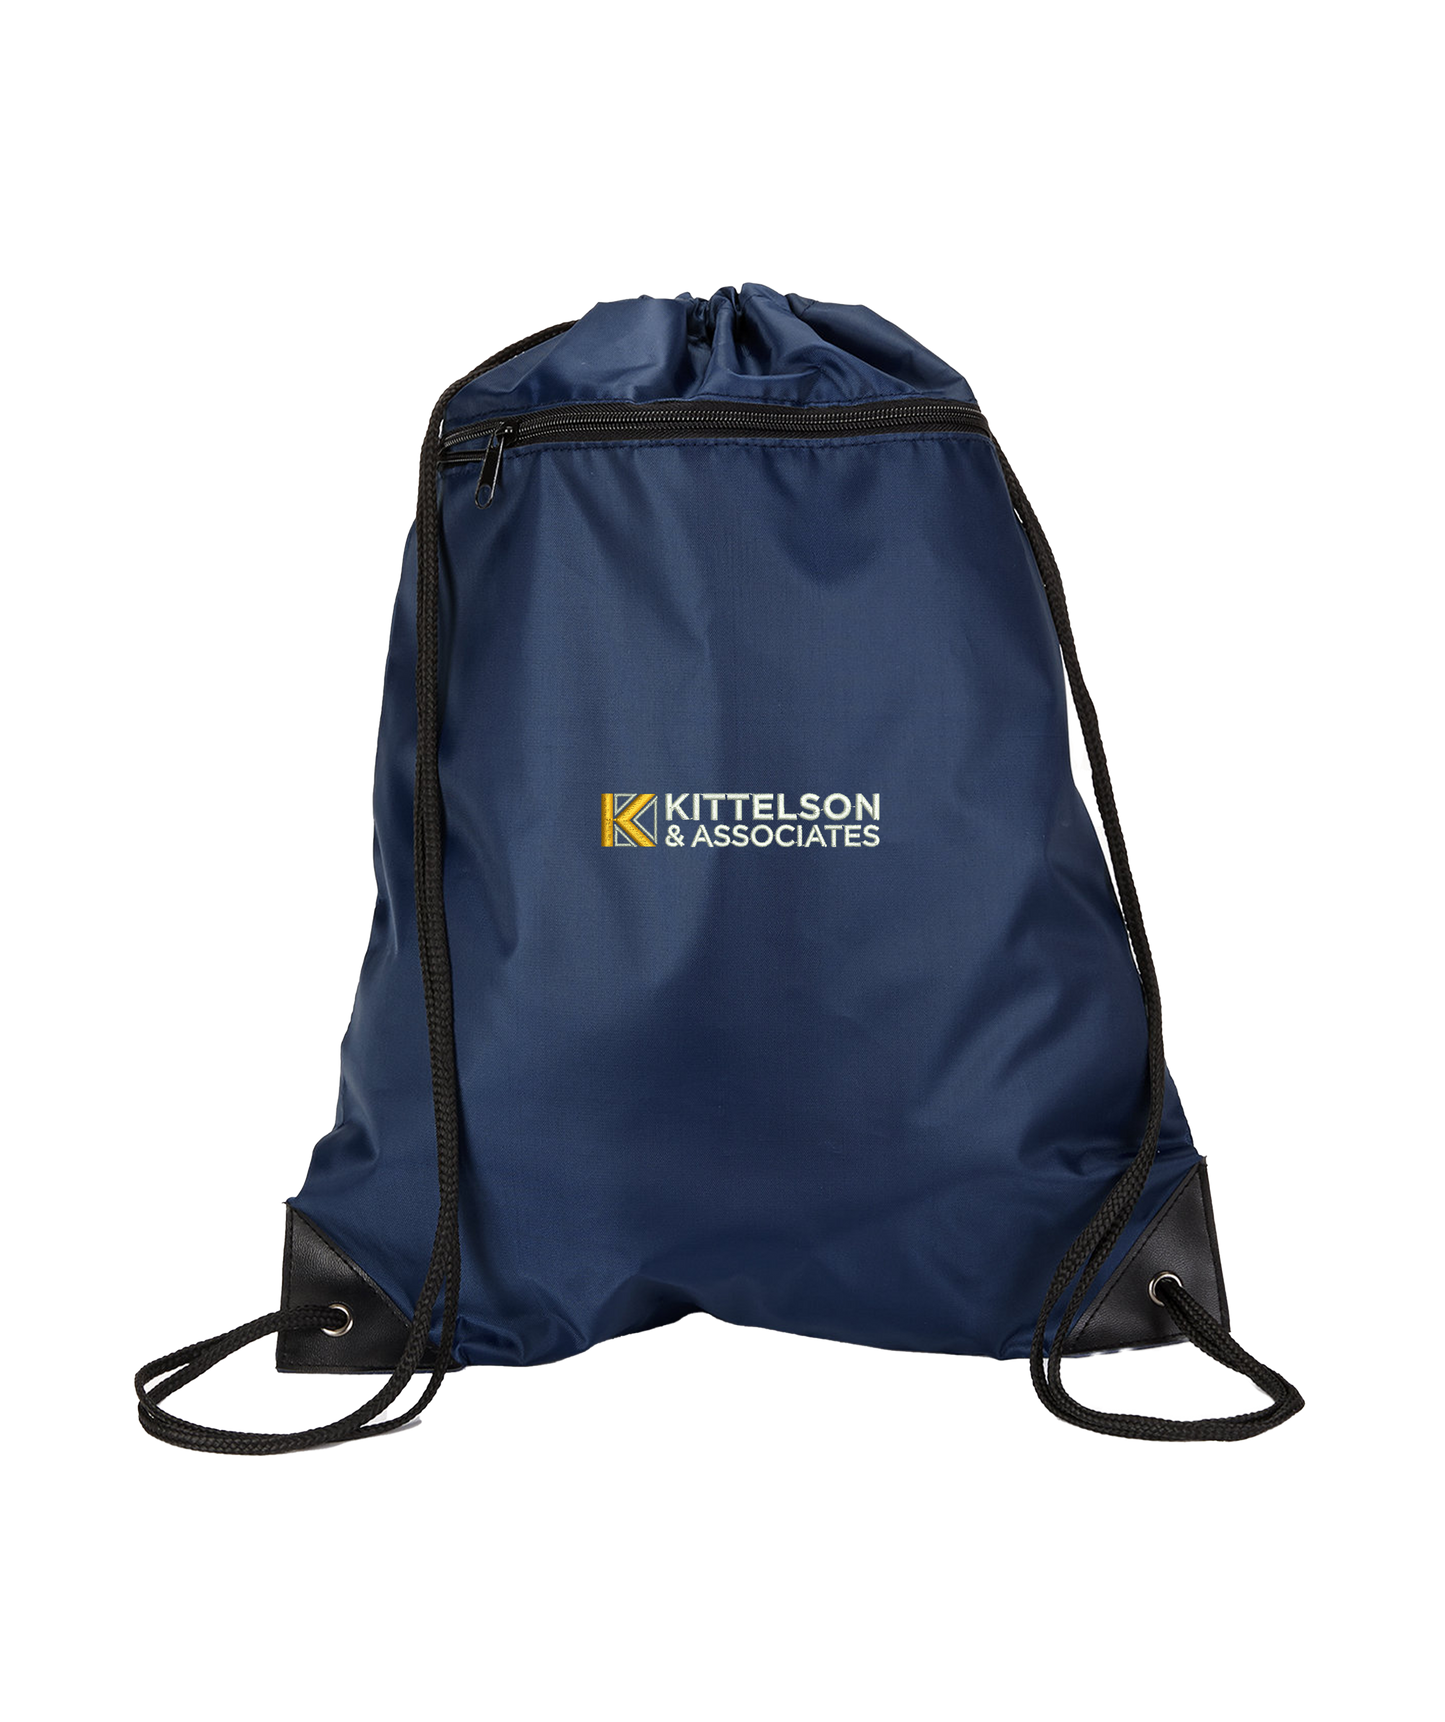 Liberty Bags Zipper Drawstring Backpack